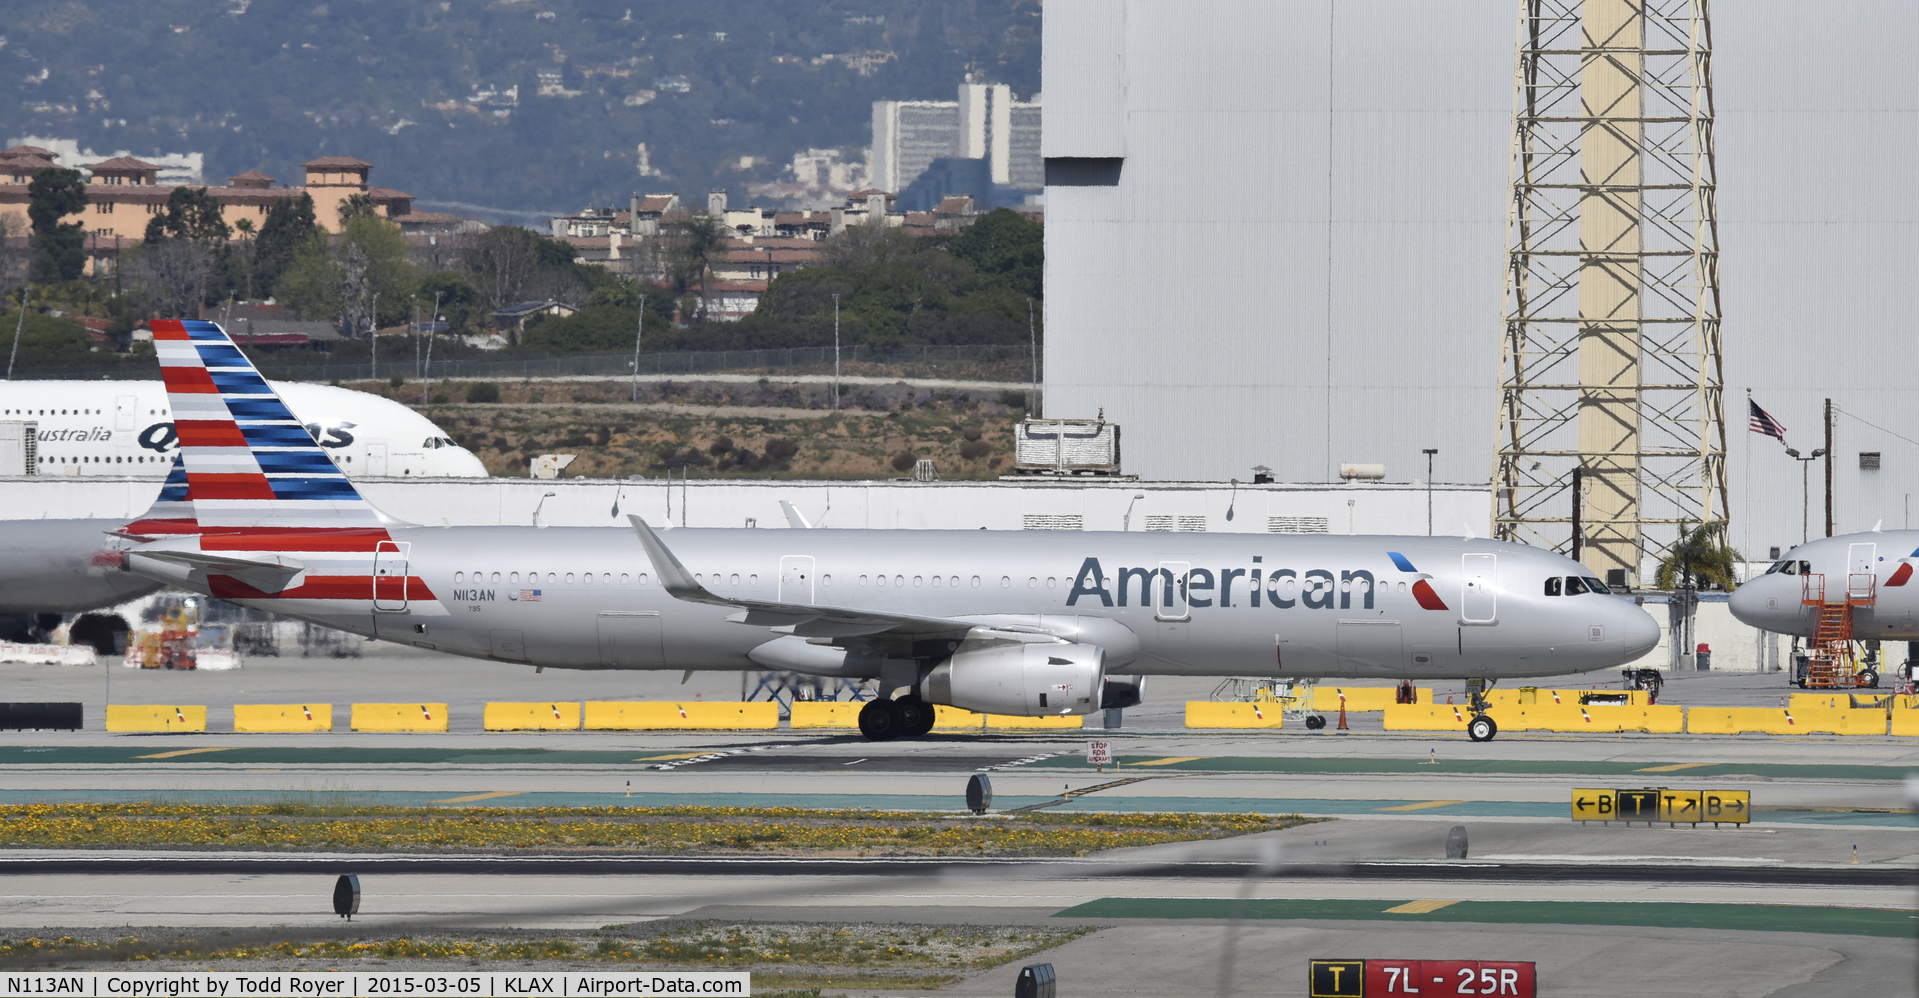 N113AN, 2014 Airbus A321-231 C/N 6020, Taxiing o gate at LAX